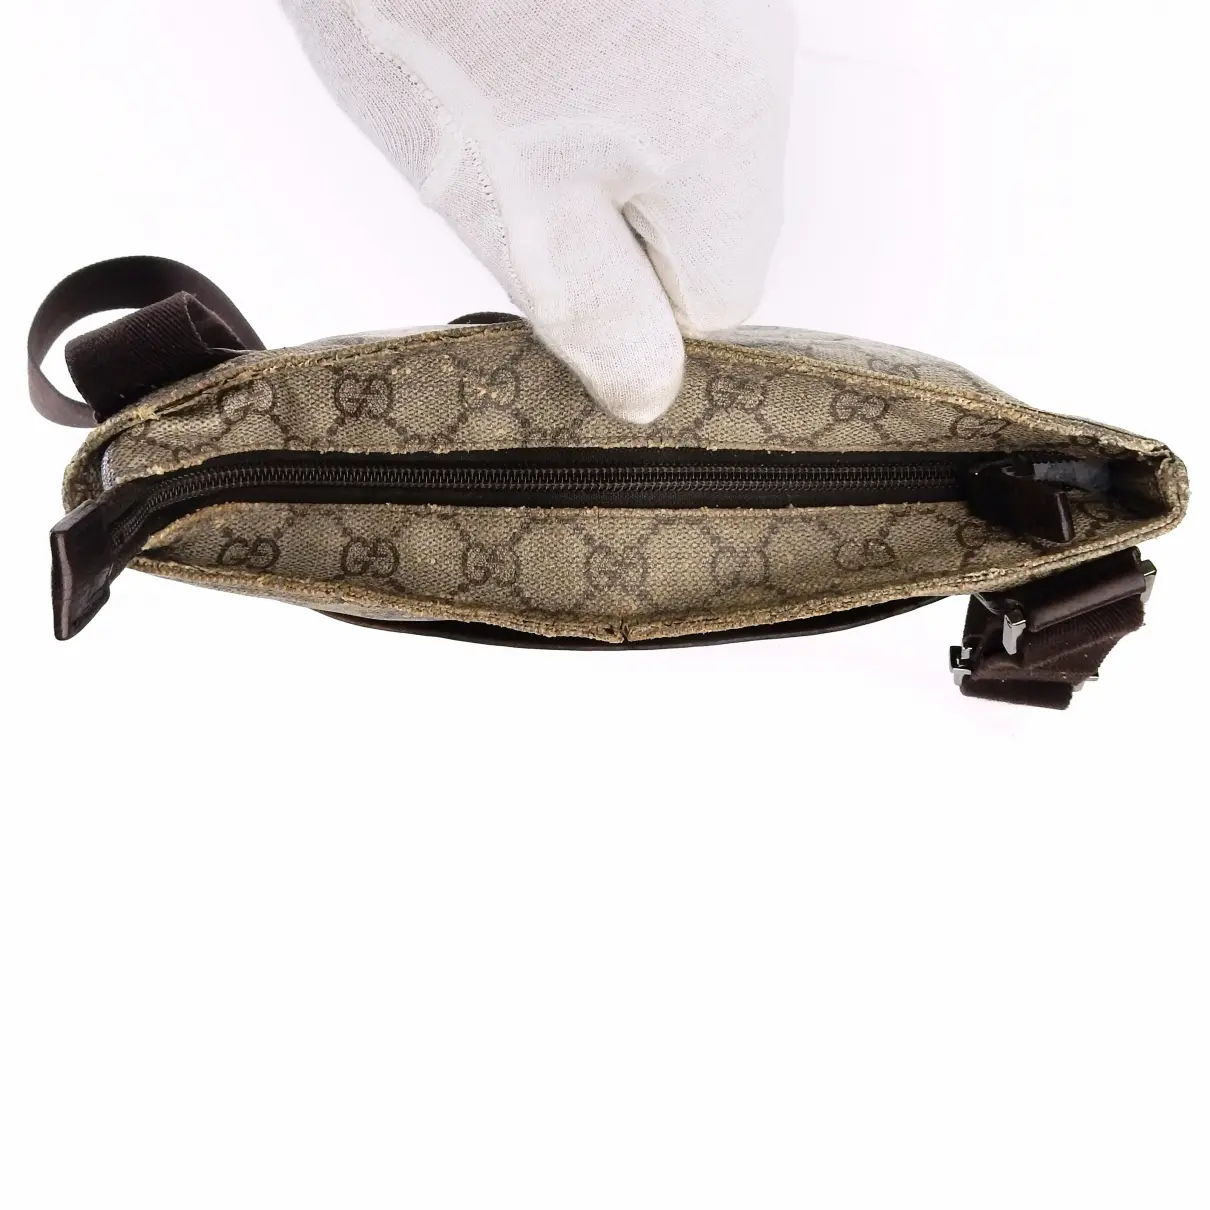 Ophidia Messenger cloth handbag Gucci